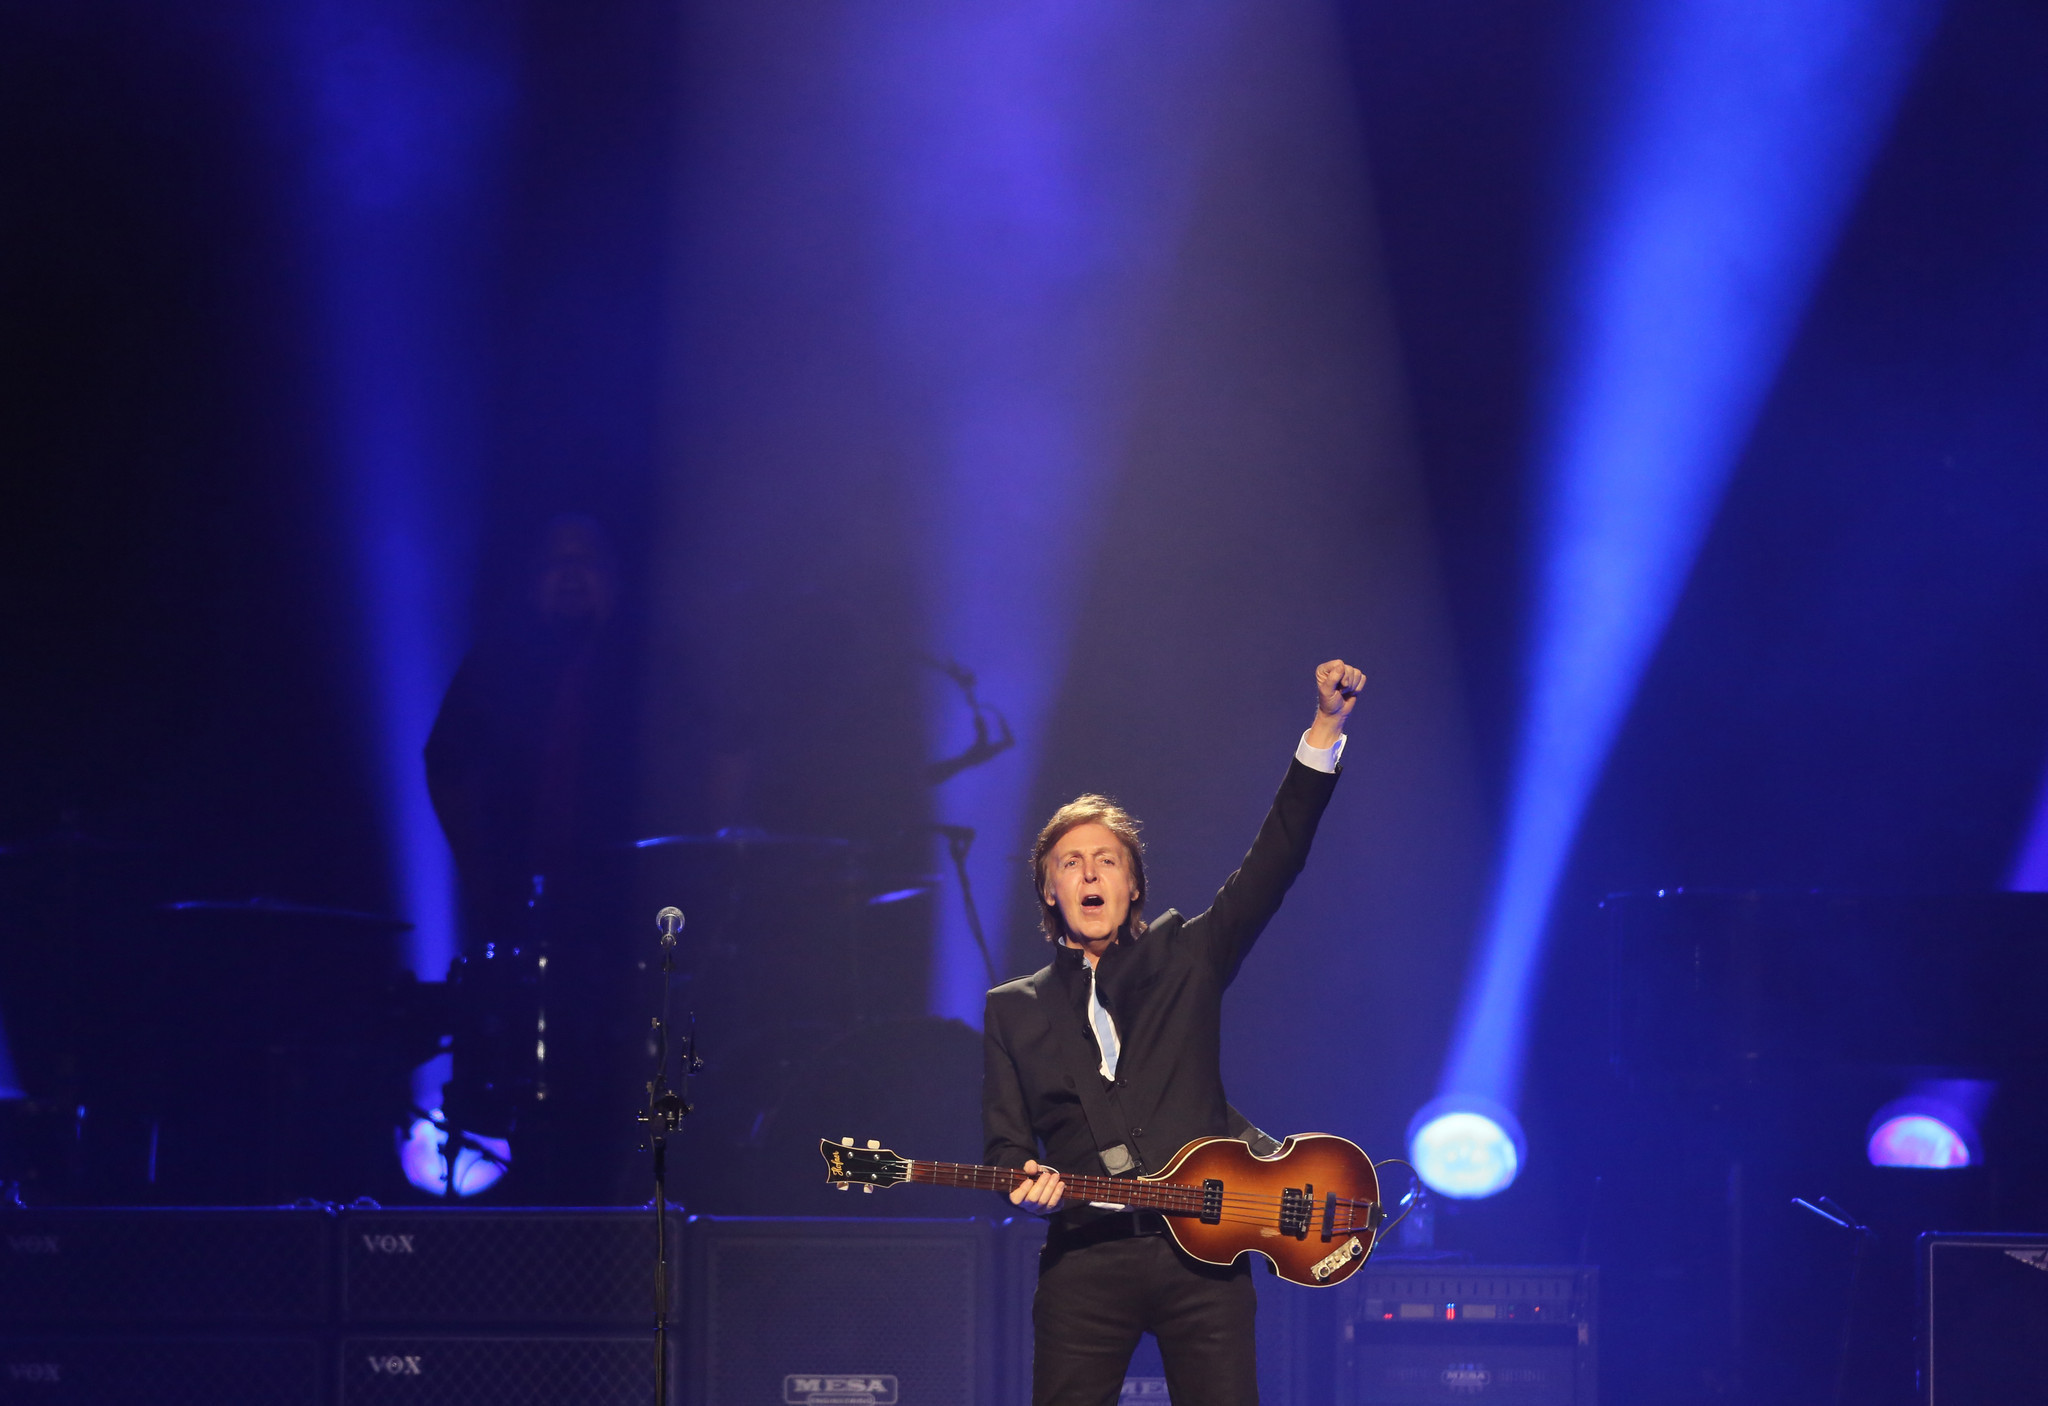 Pictures: Paul McCartney Concert - Orlando Sentinel2048 x 1406